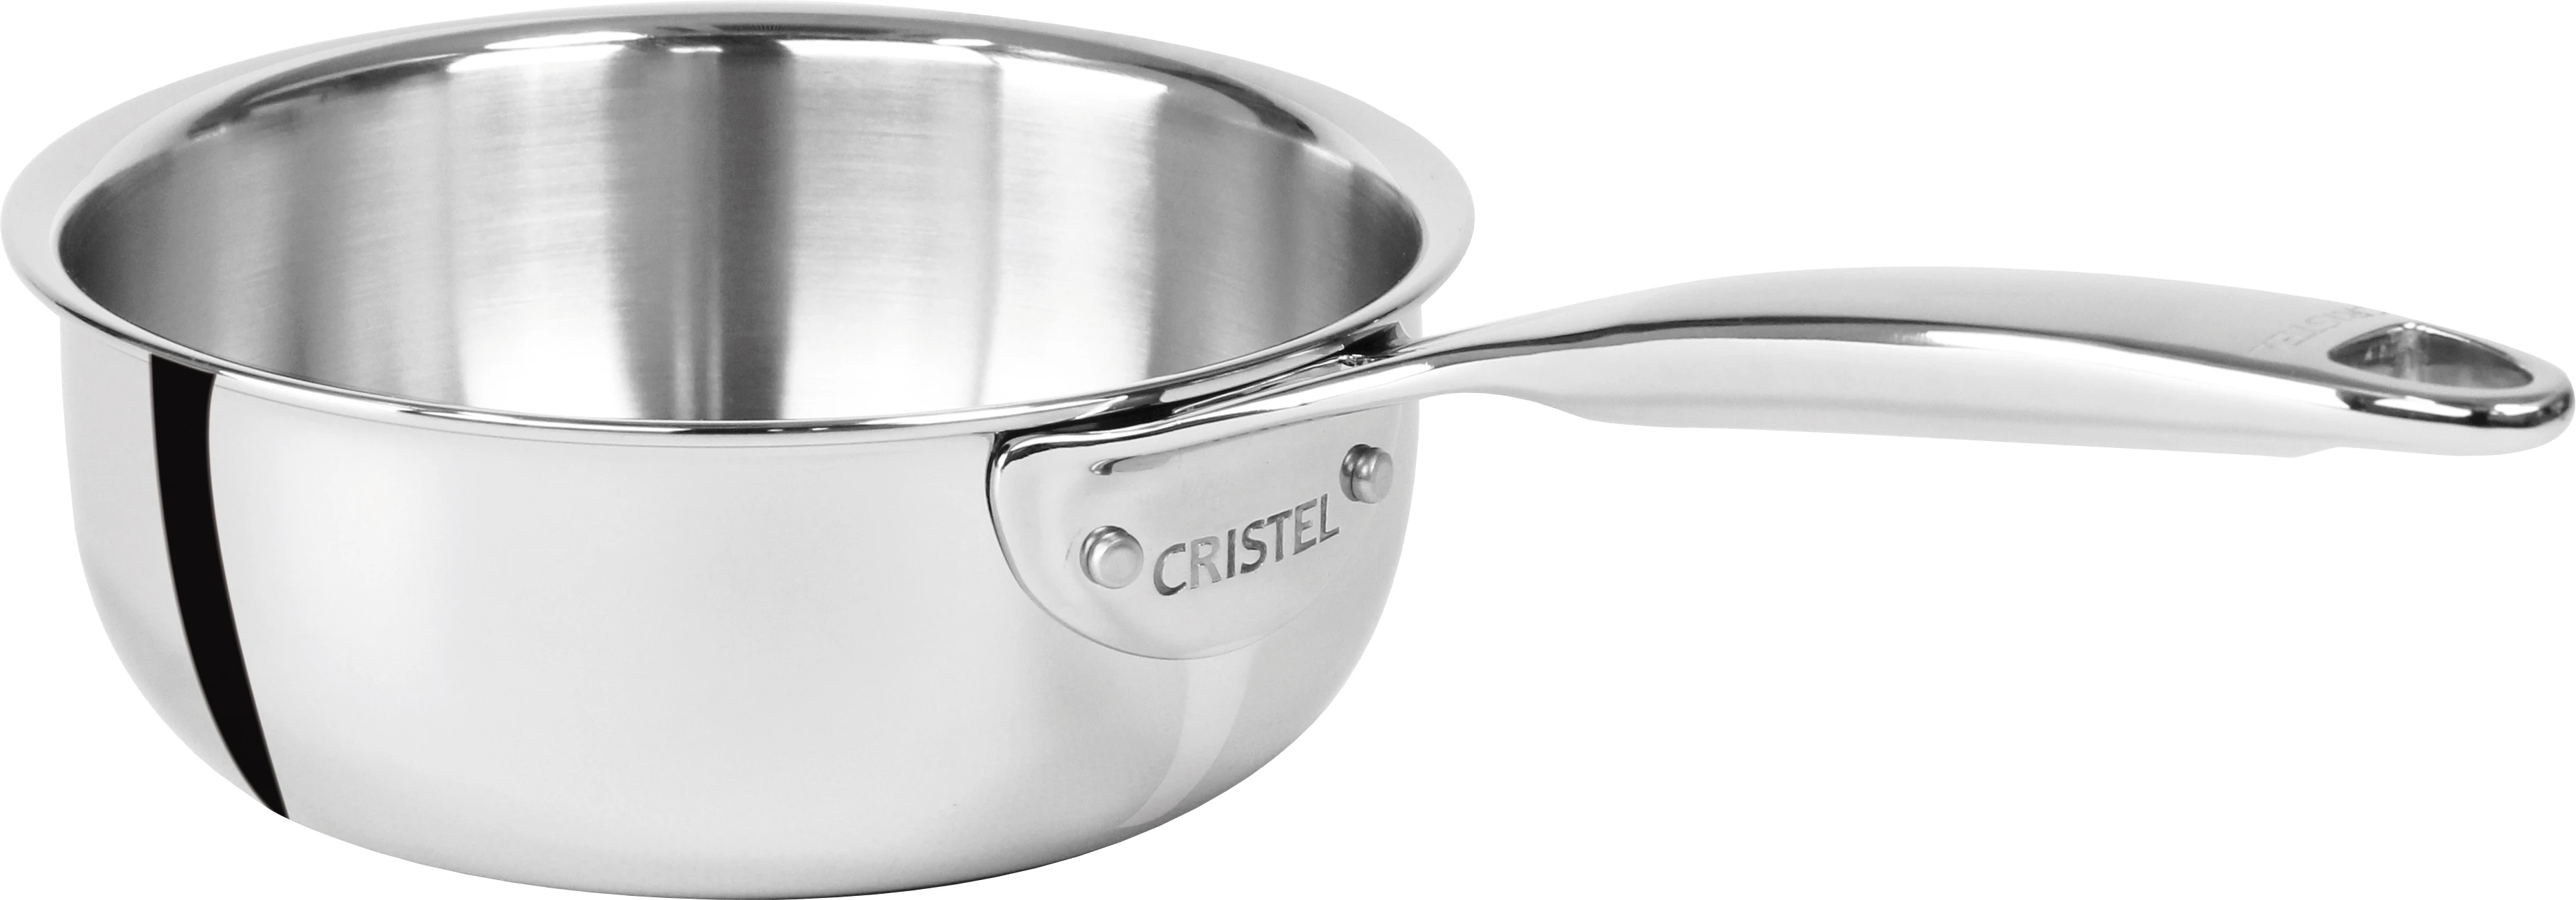 Cristel Castel'Pro kasserolle, 1,2 ltr., ø16 cm